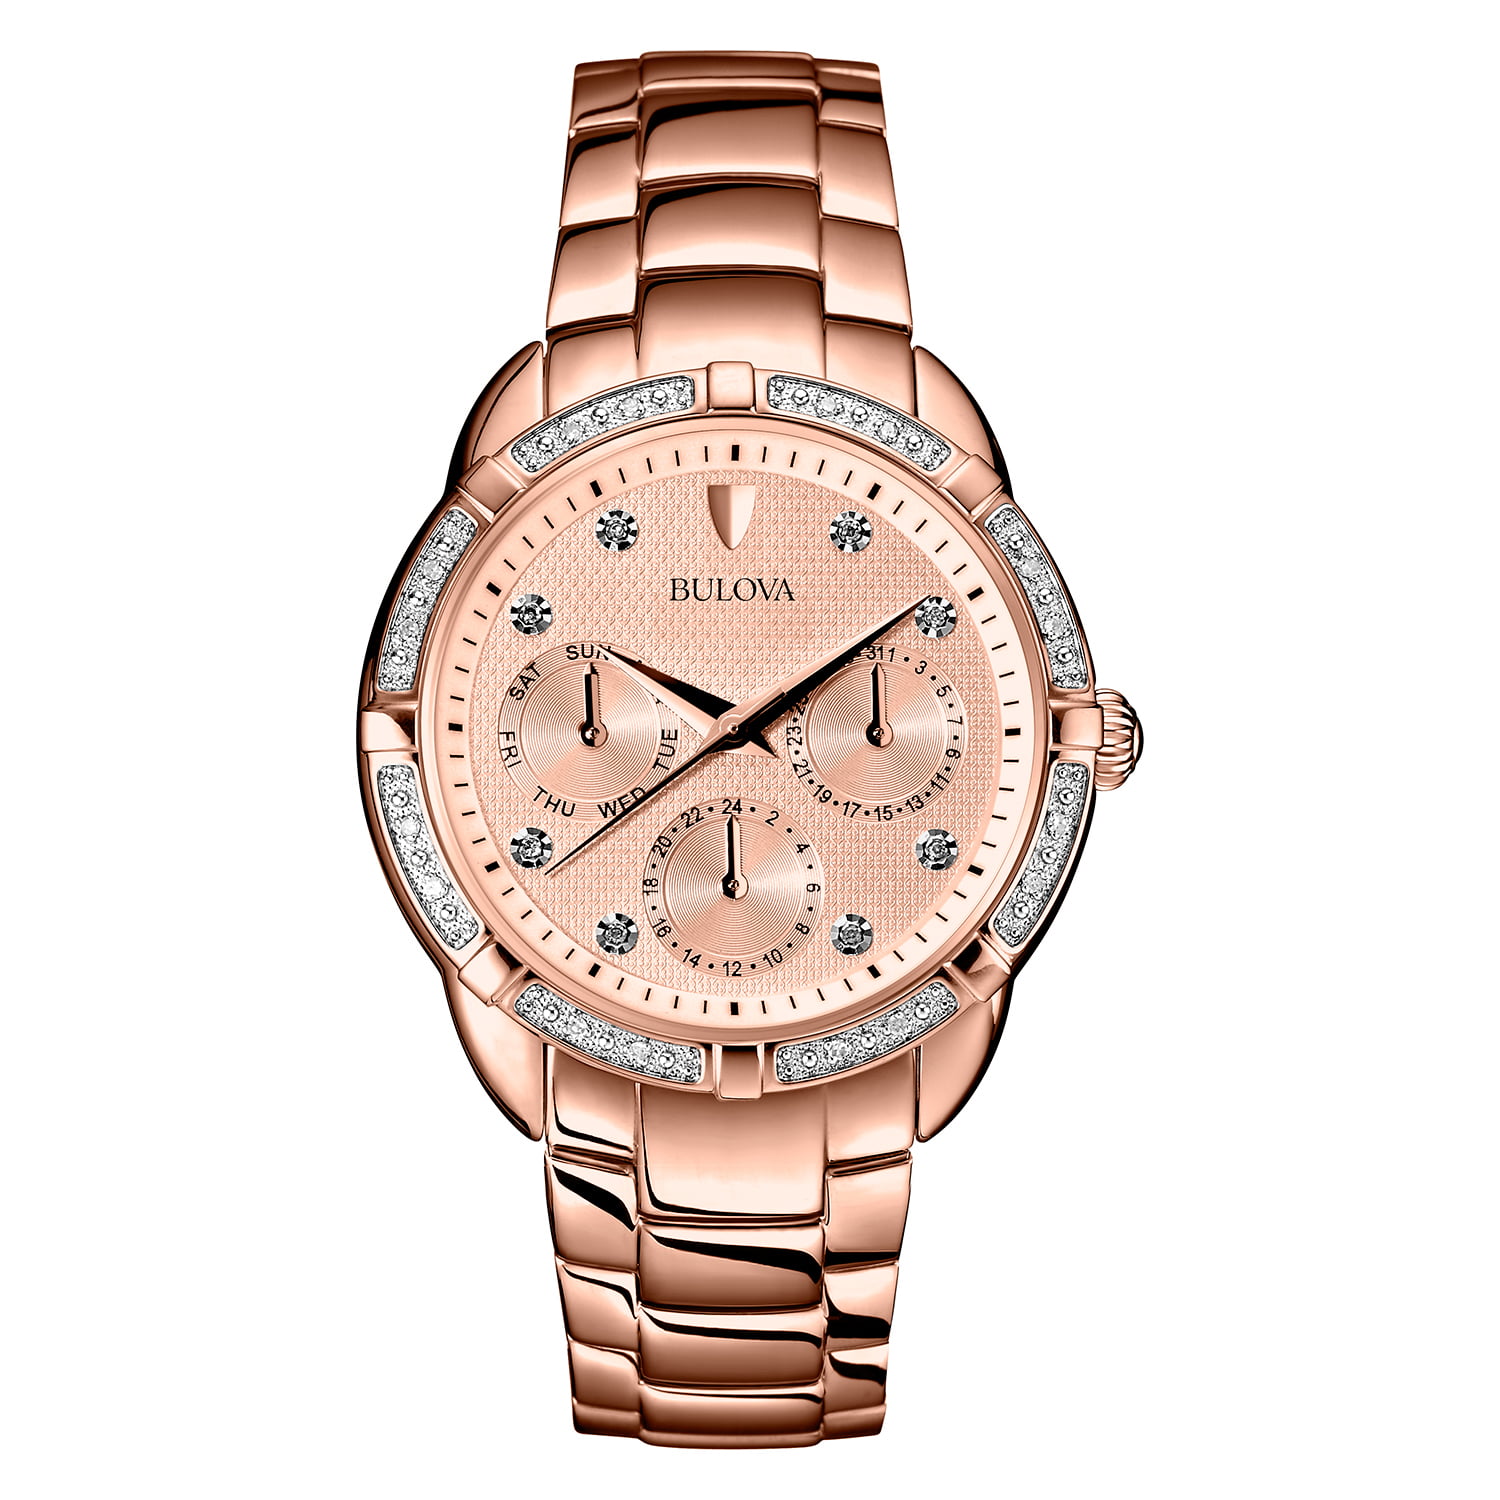 Bulova Factory Refurbished Women's Rose-Tone Diamond Accent Watch